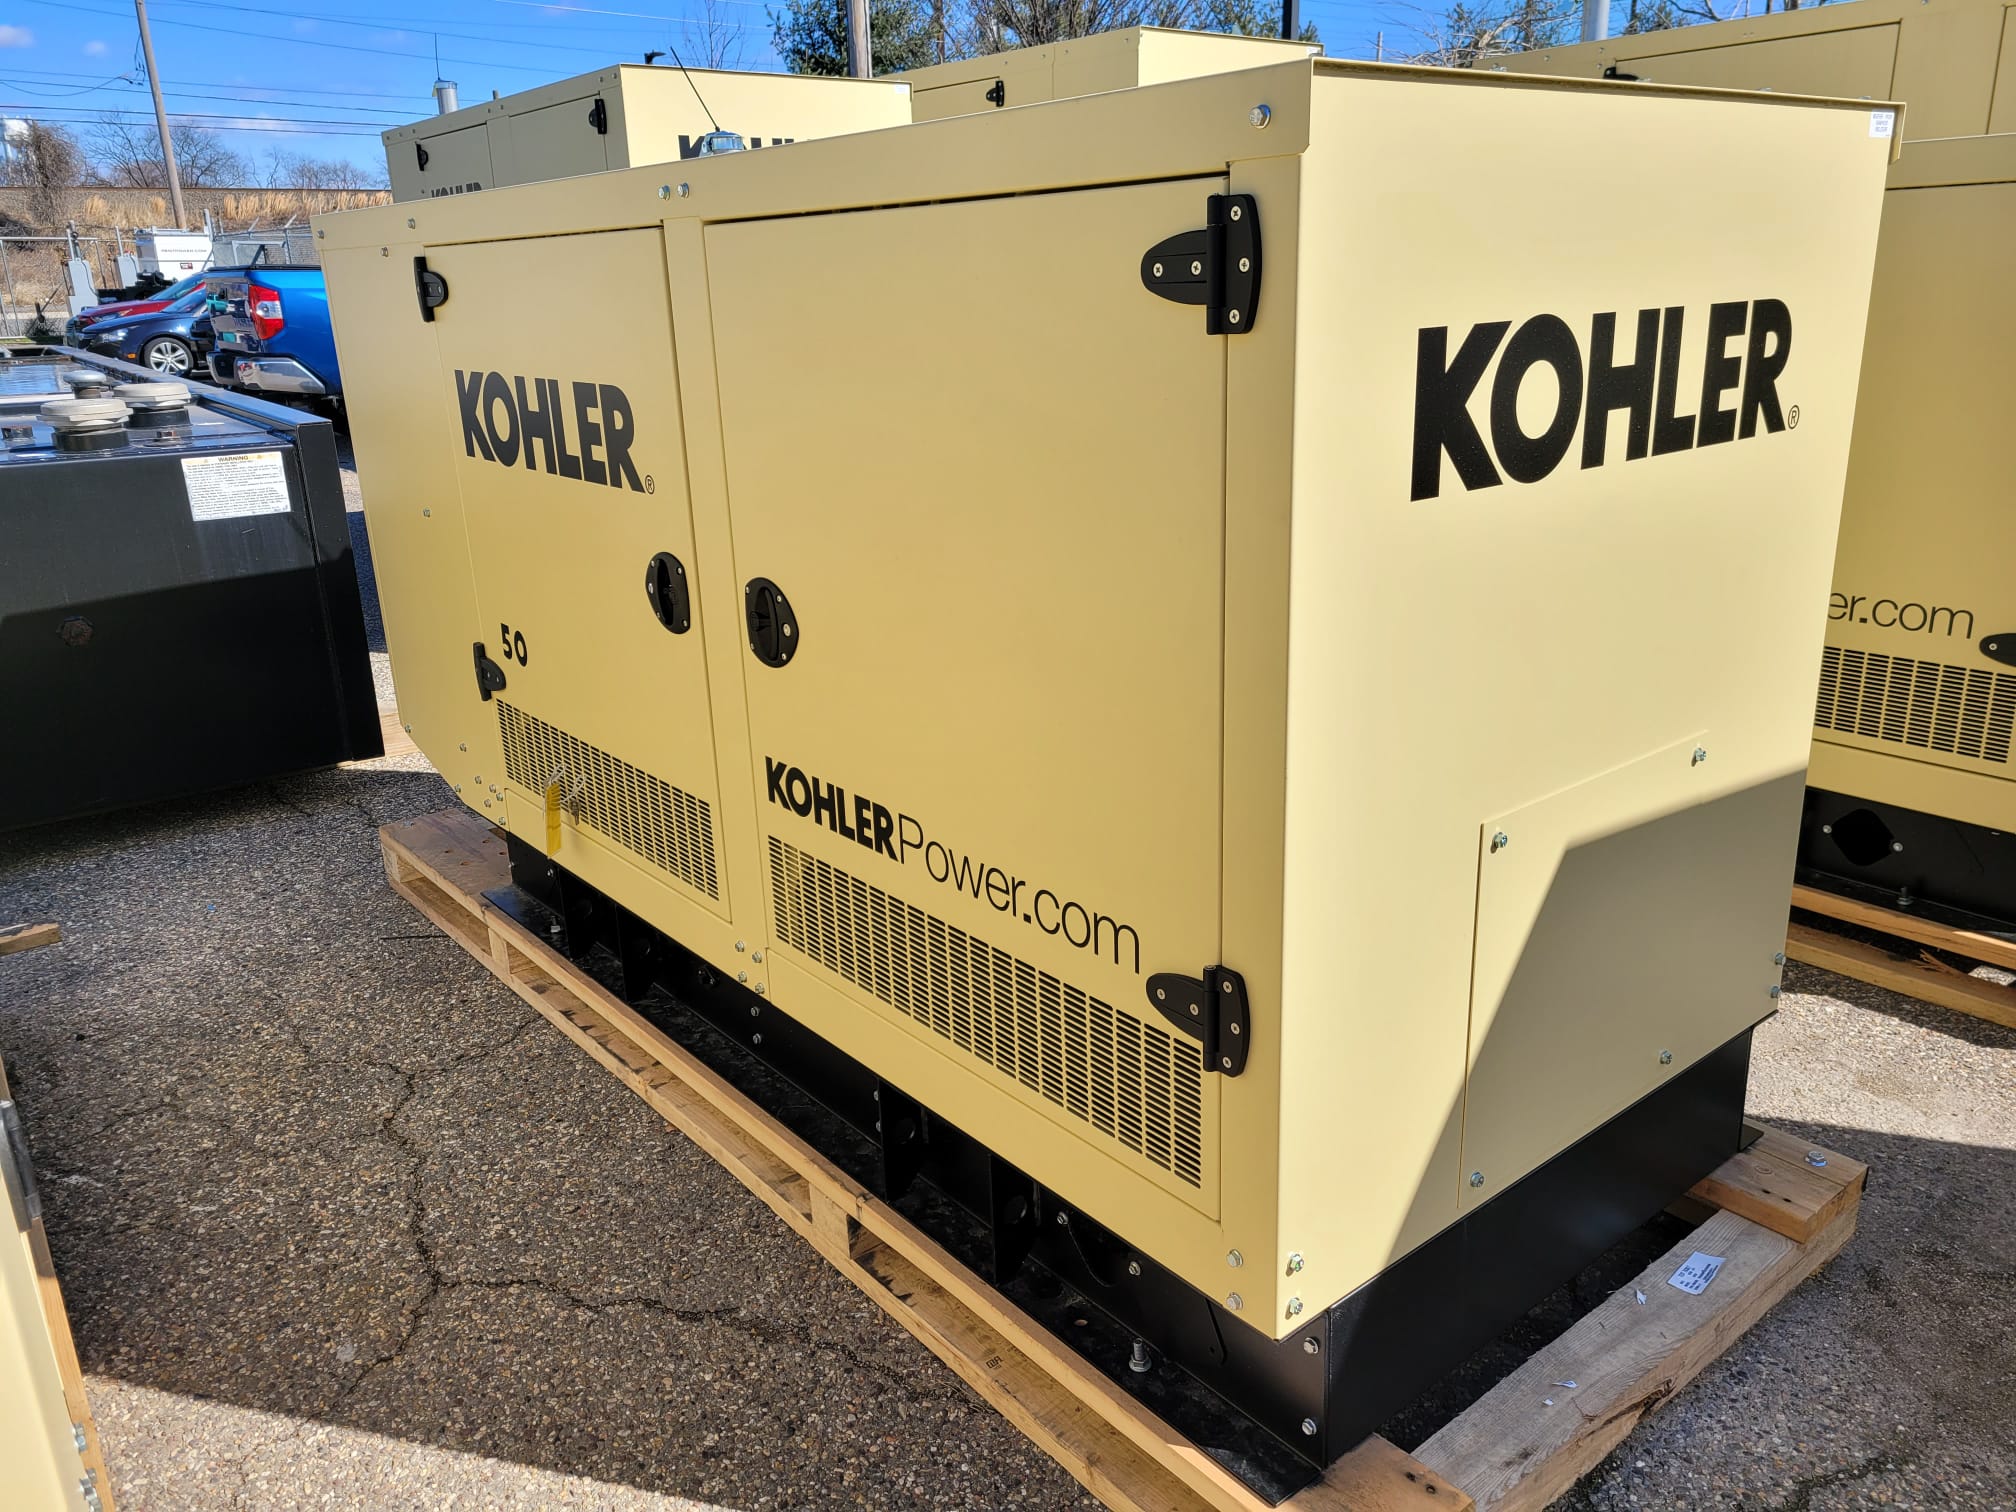 New 50 kW Kohler KG50 Natural Gas Generator – Steel sound enclosure – EPA Certified